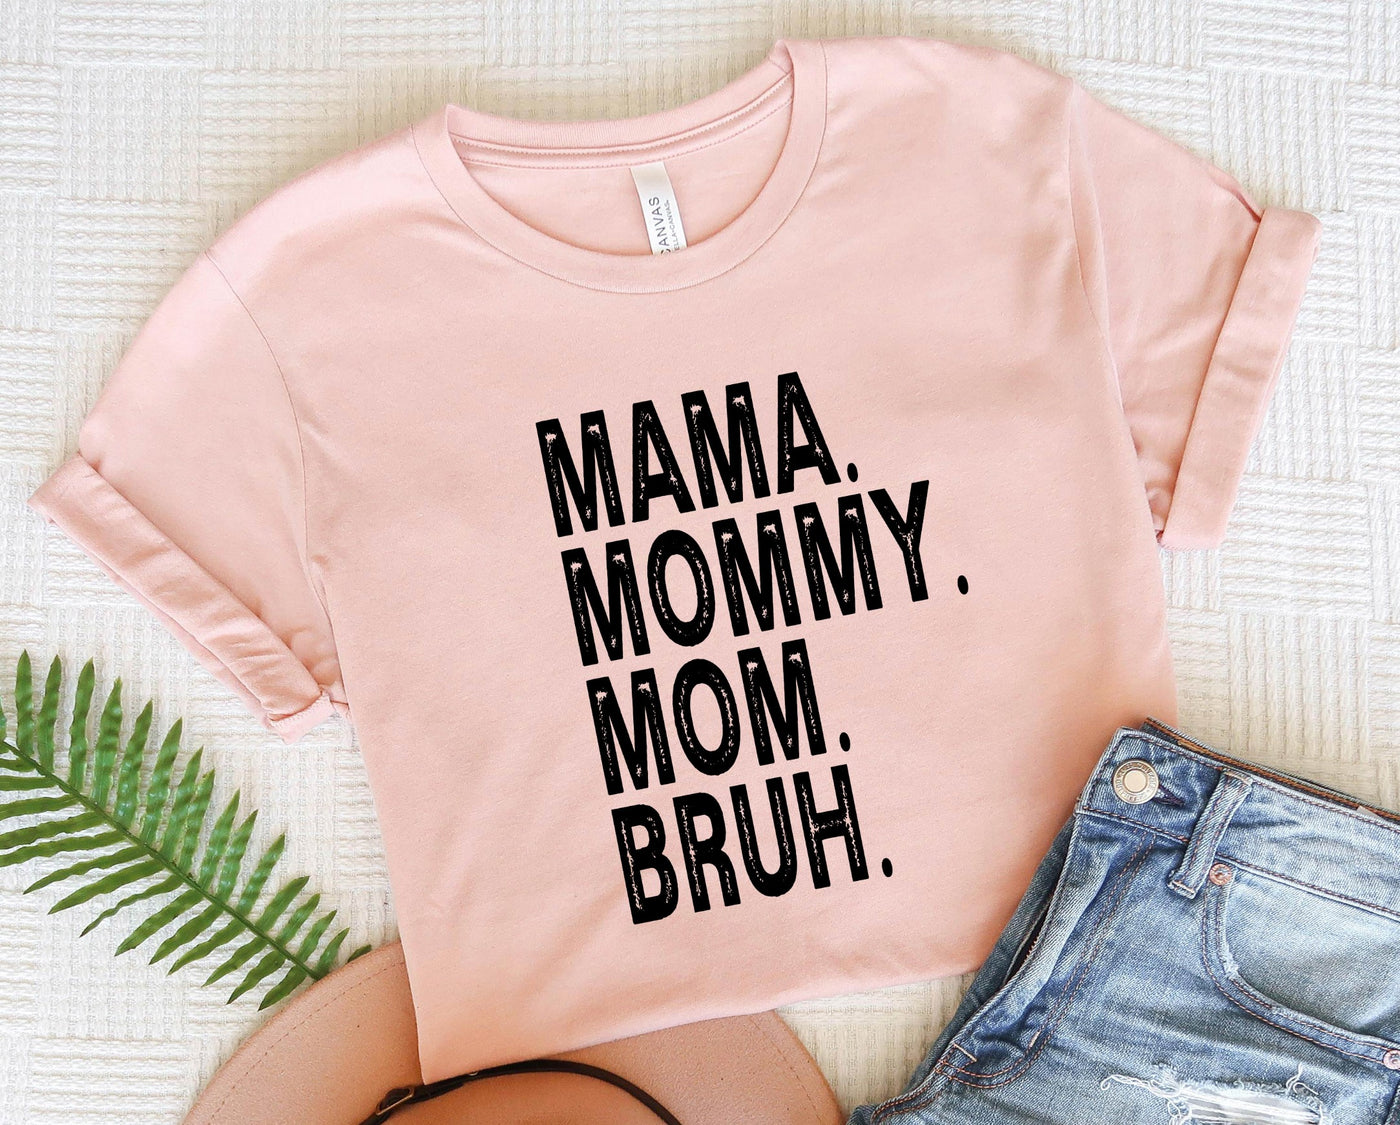 Mama Mommy Mom Bruh.